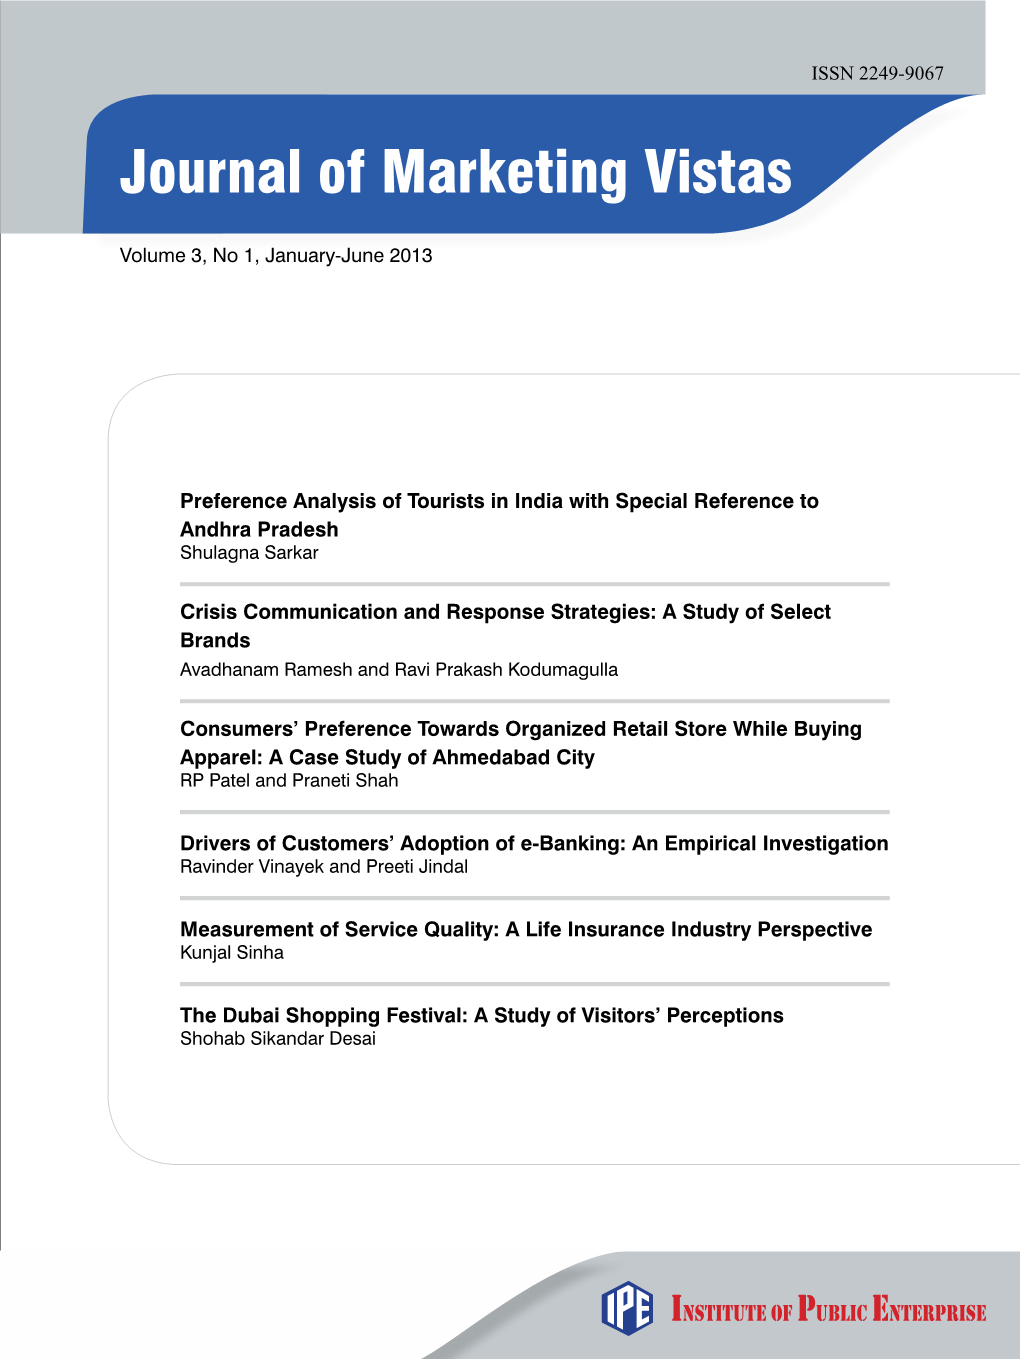 Journal of Marketing Vistas